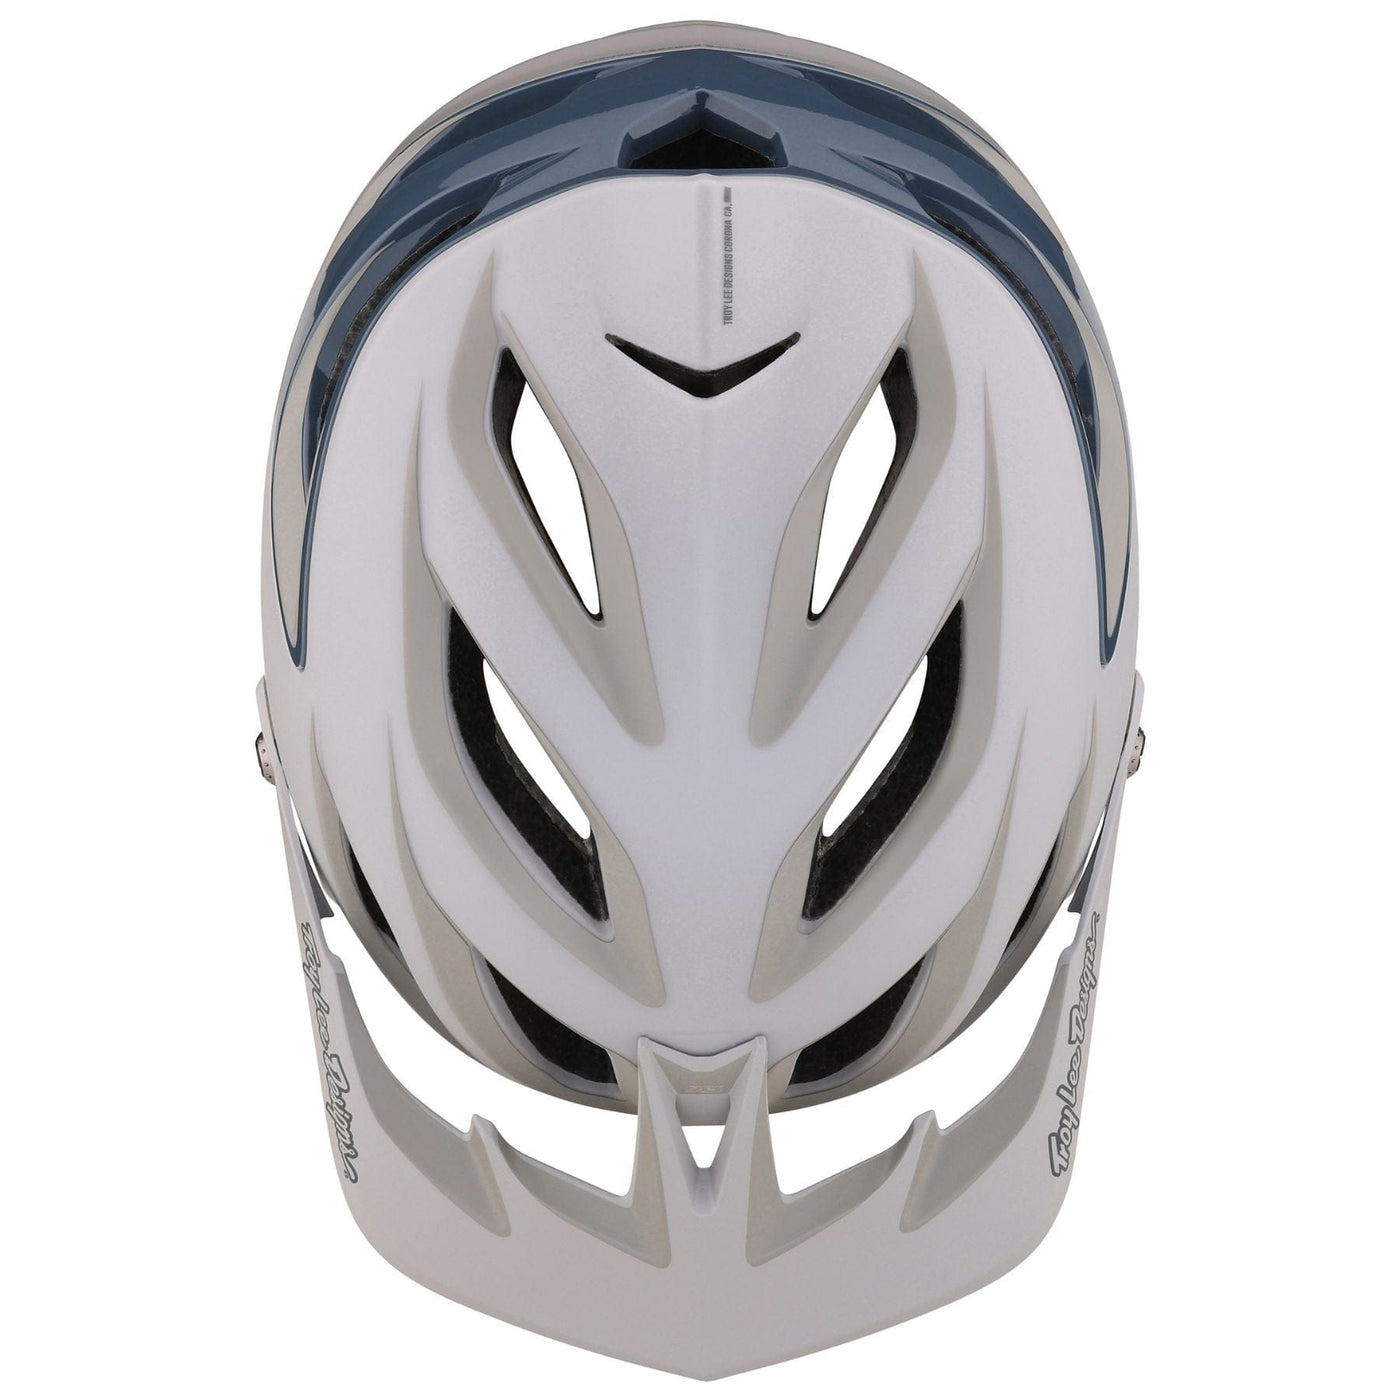 trail riding open face helmet - light gray